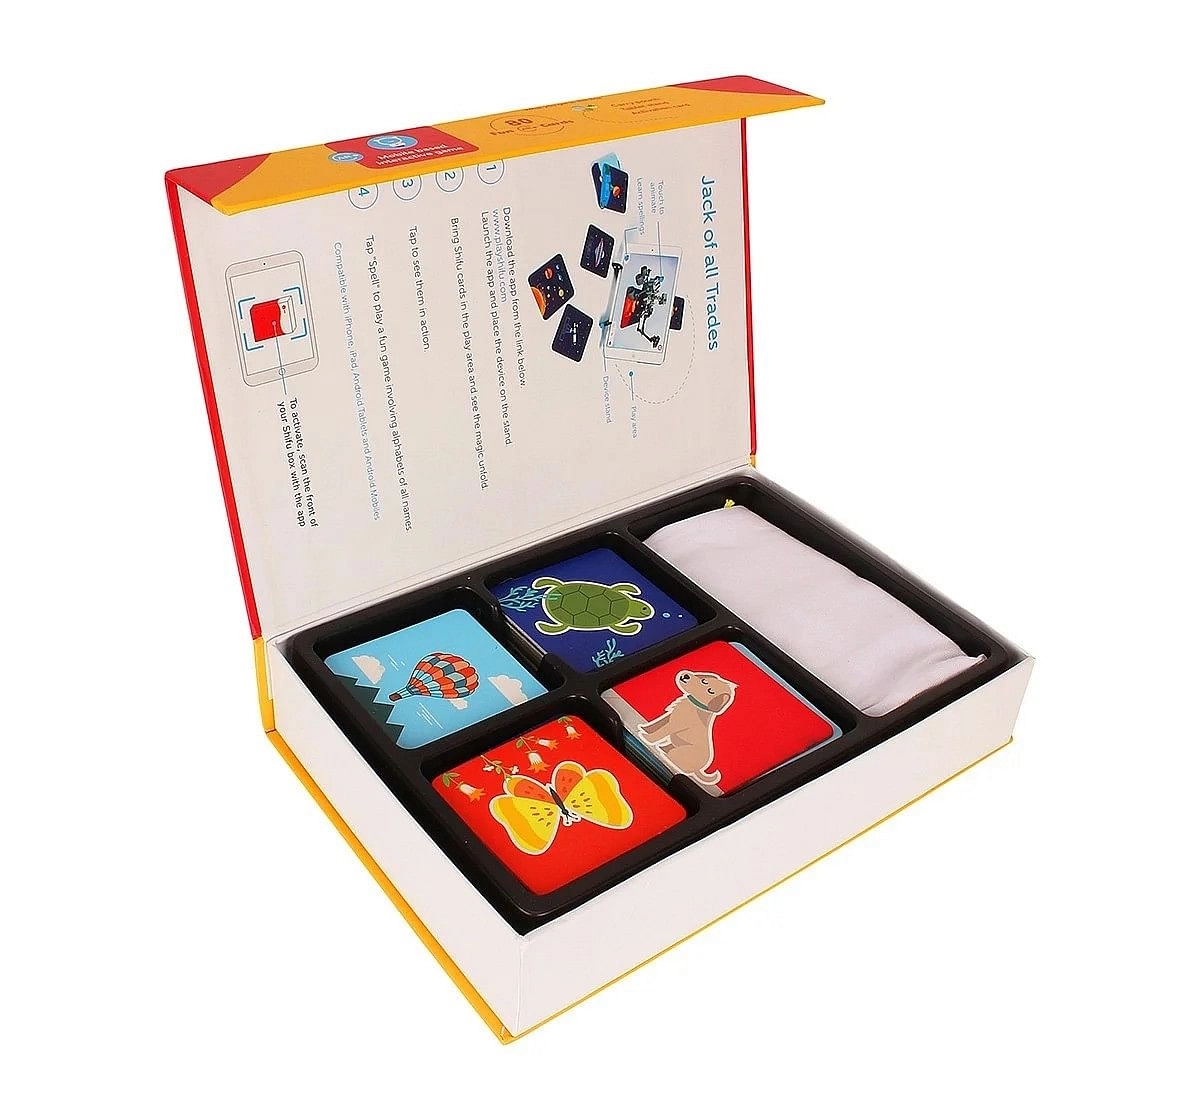 Playshifu Shifu Fusion 4 In 1  Science Kits for Kids age 2Y+ 